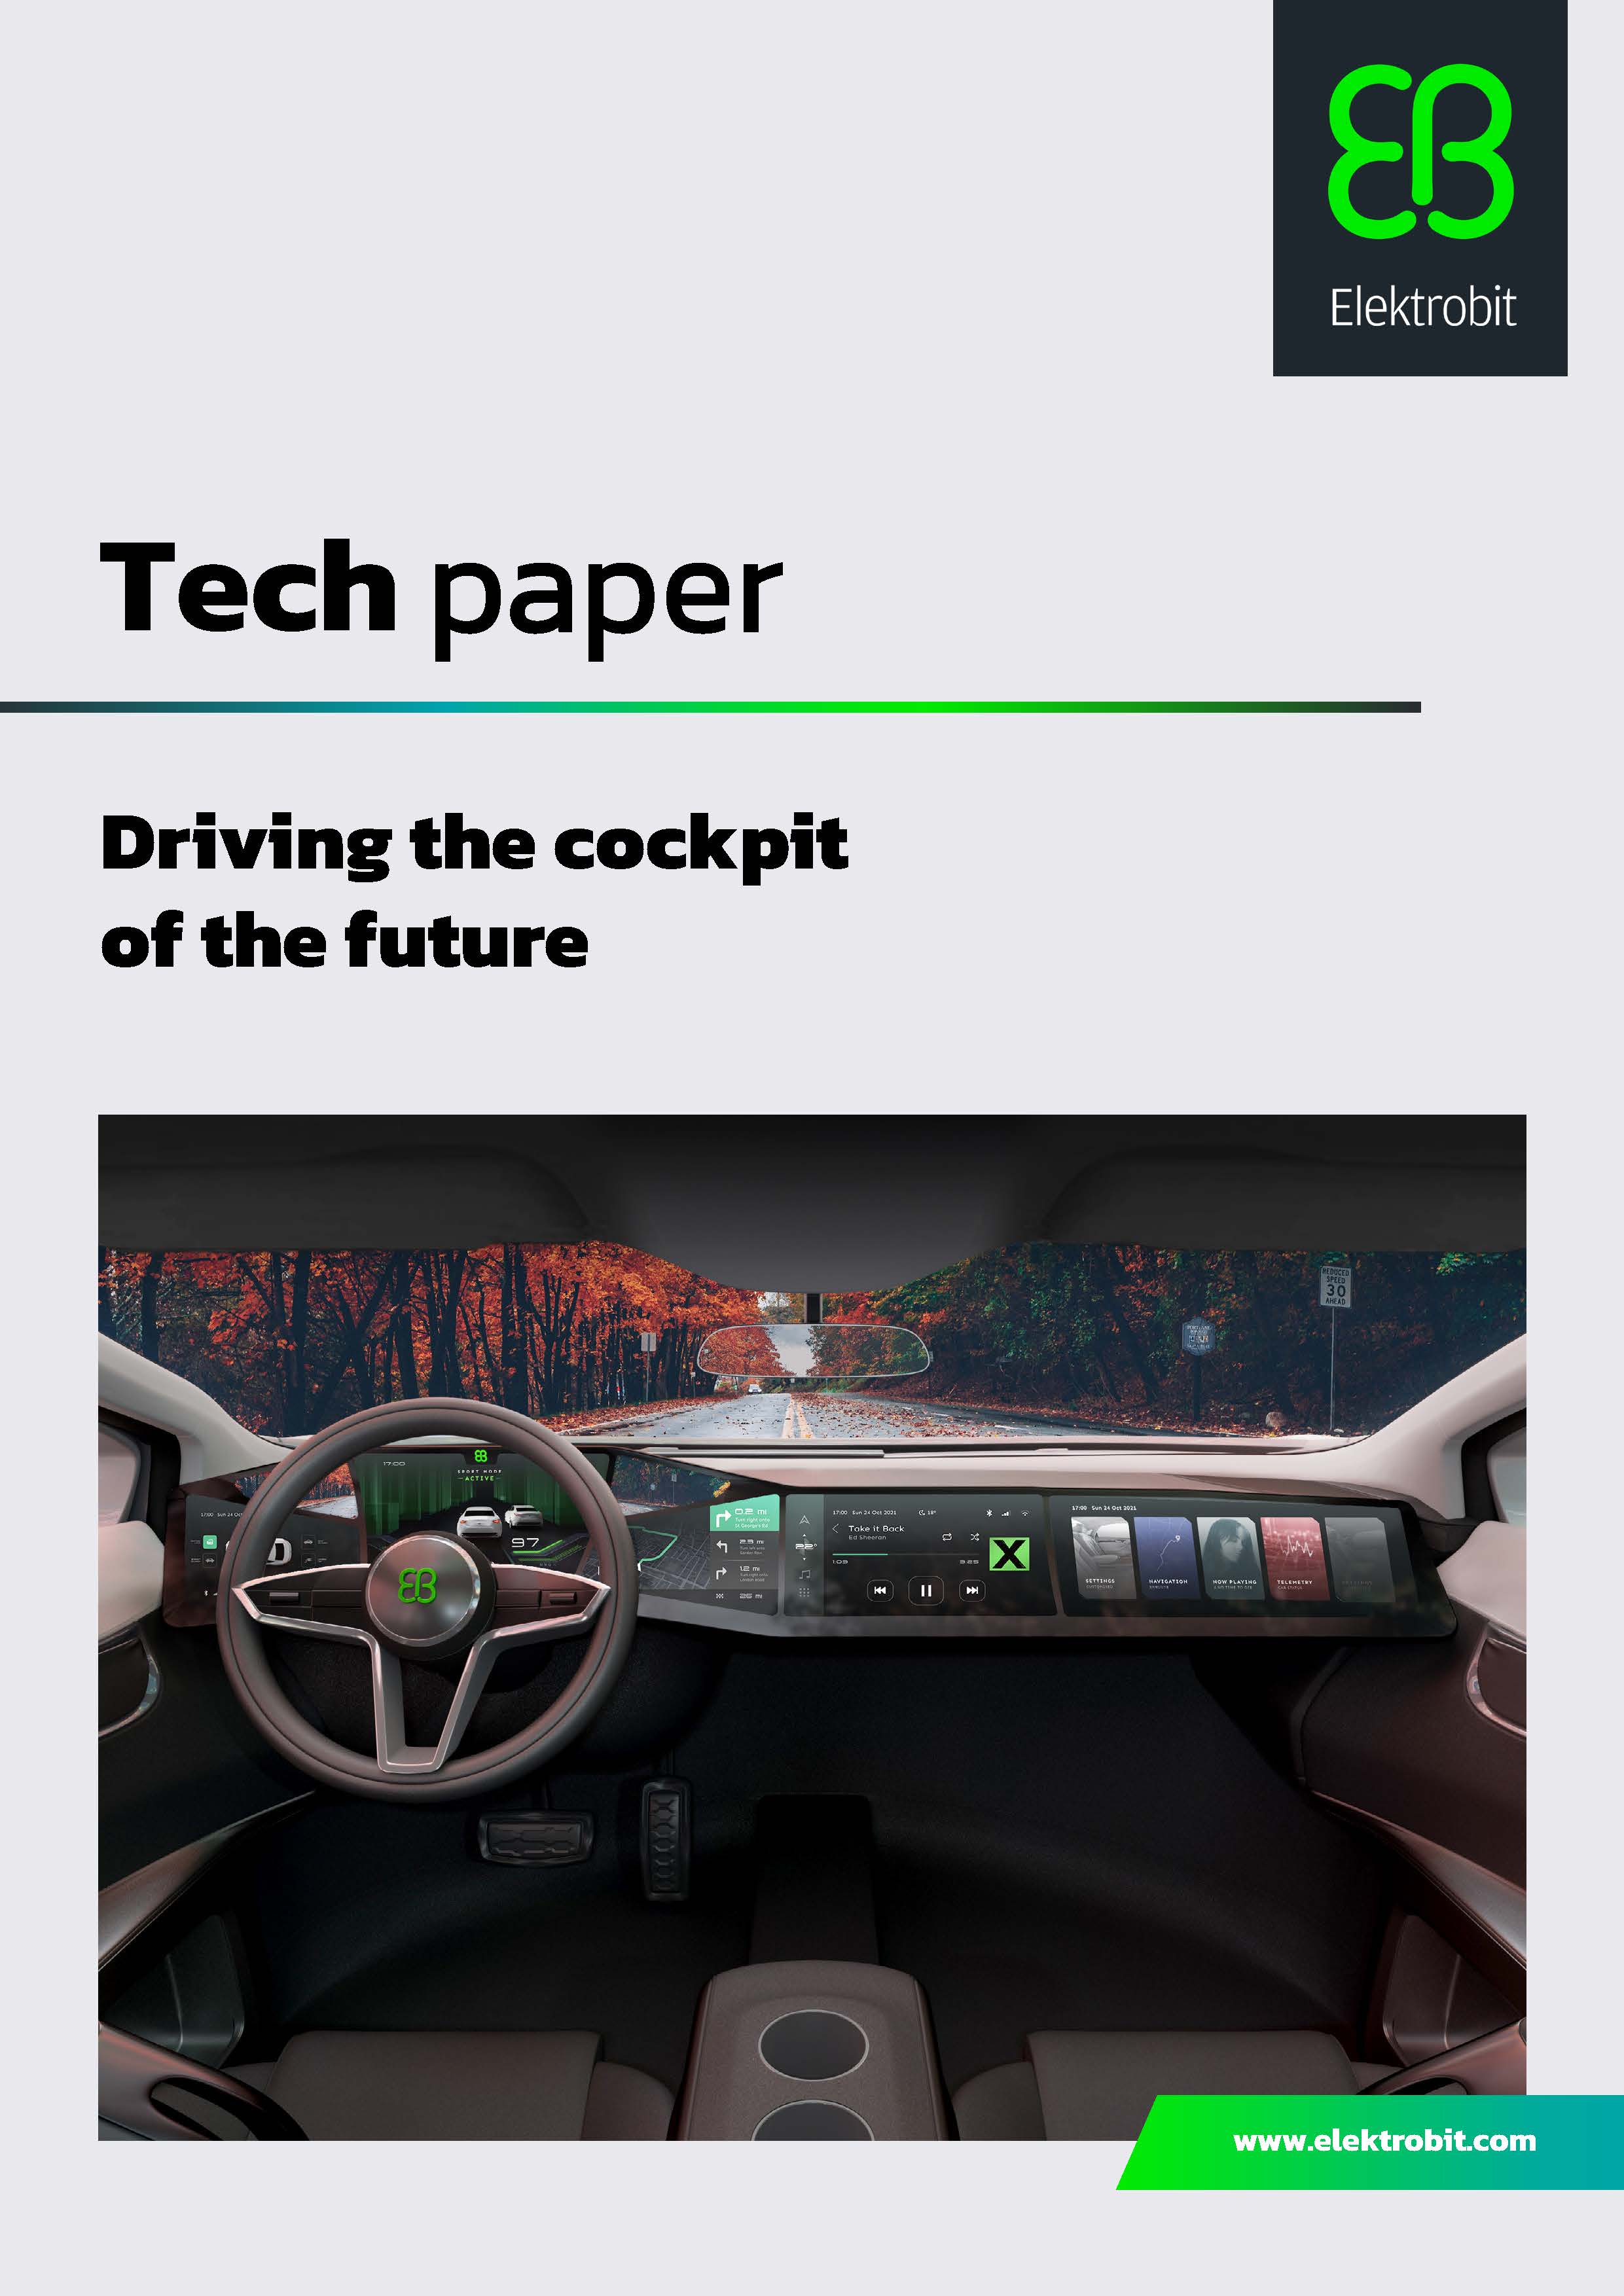 Elektrobit Driving the cockpit of the future